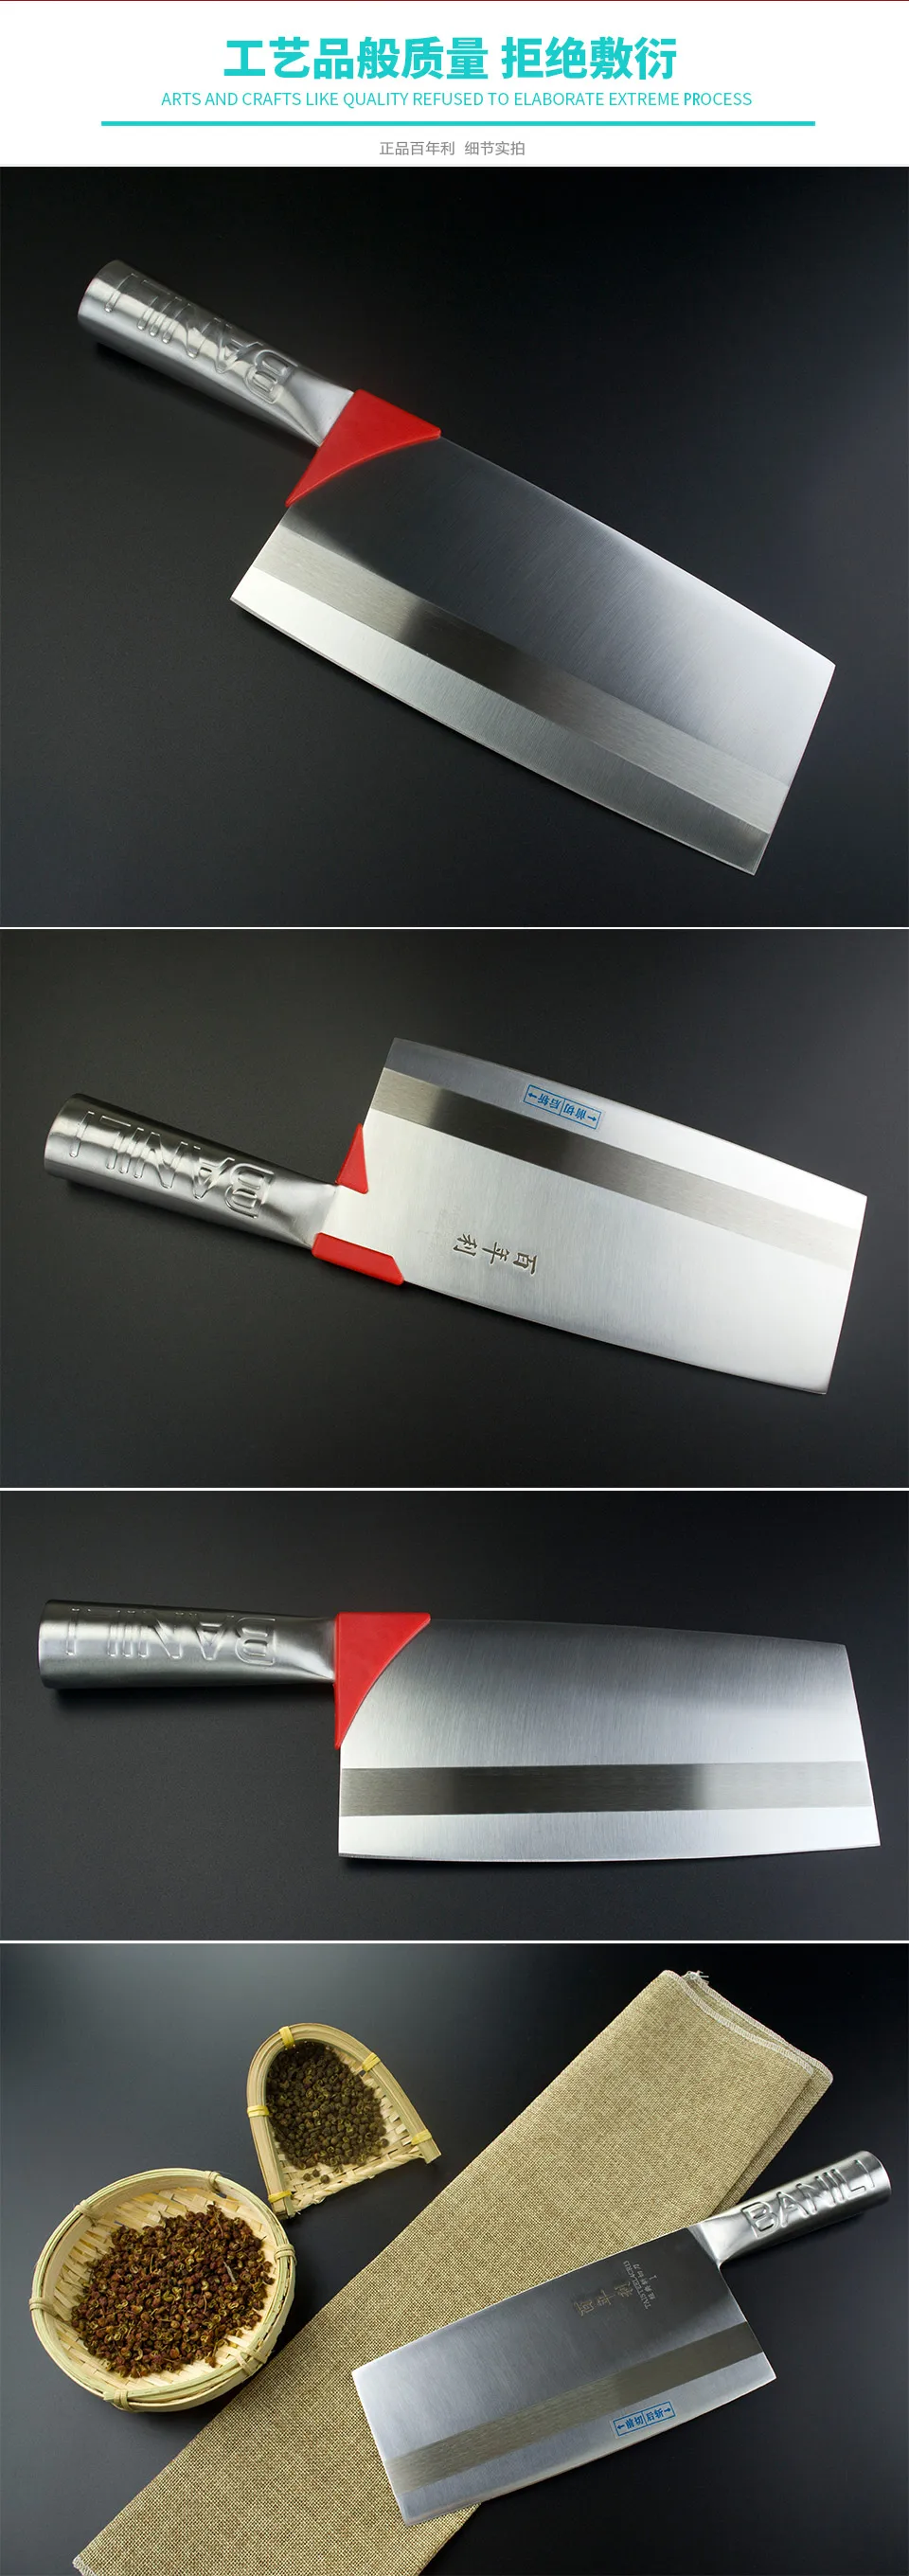 4cr13steel китайский режущий станок Rock& Chop Chopper универсальный нож китайский нож для приготовления пищи